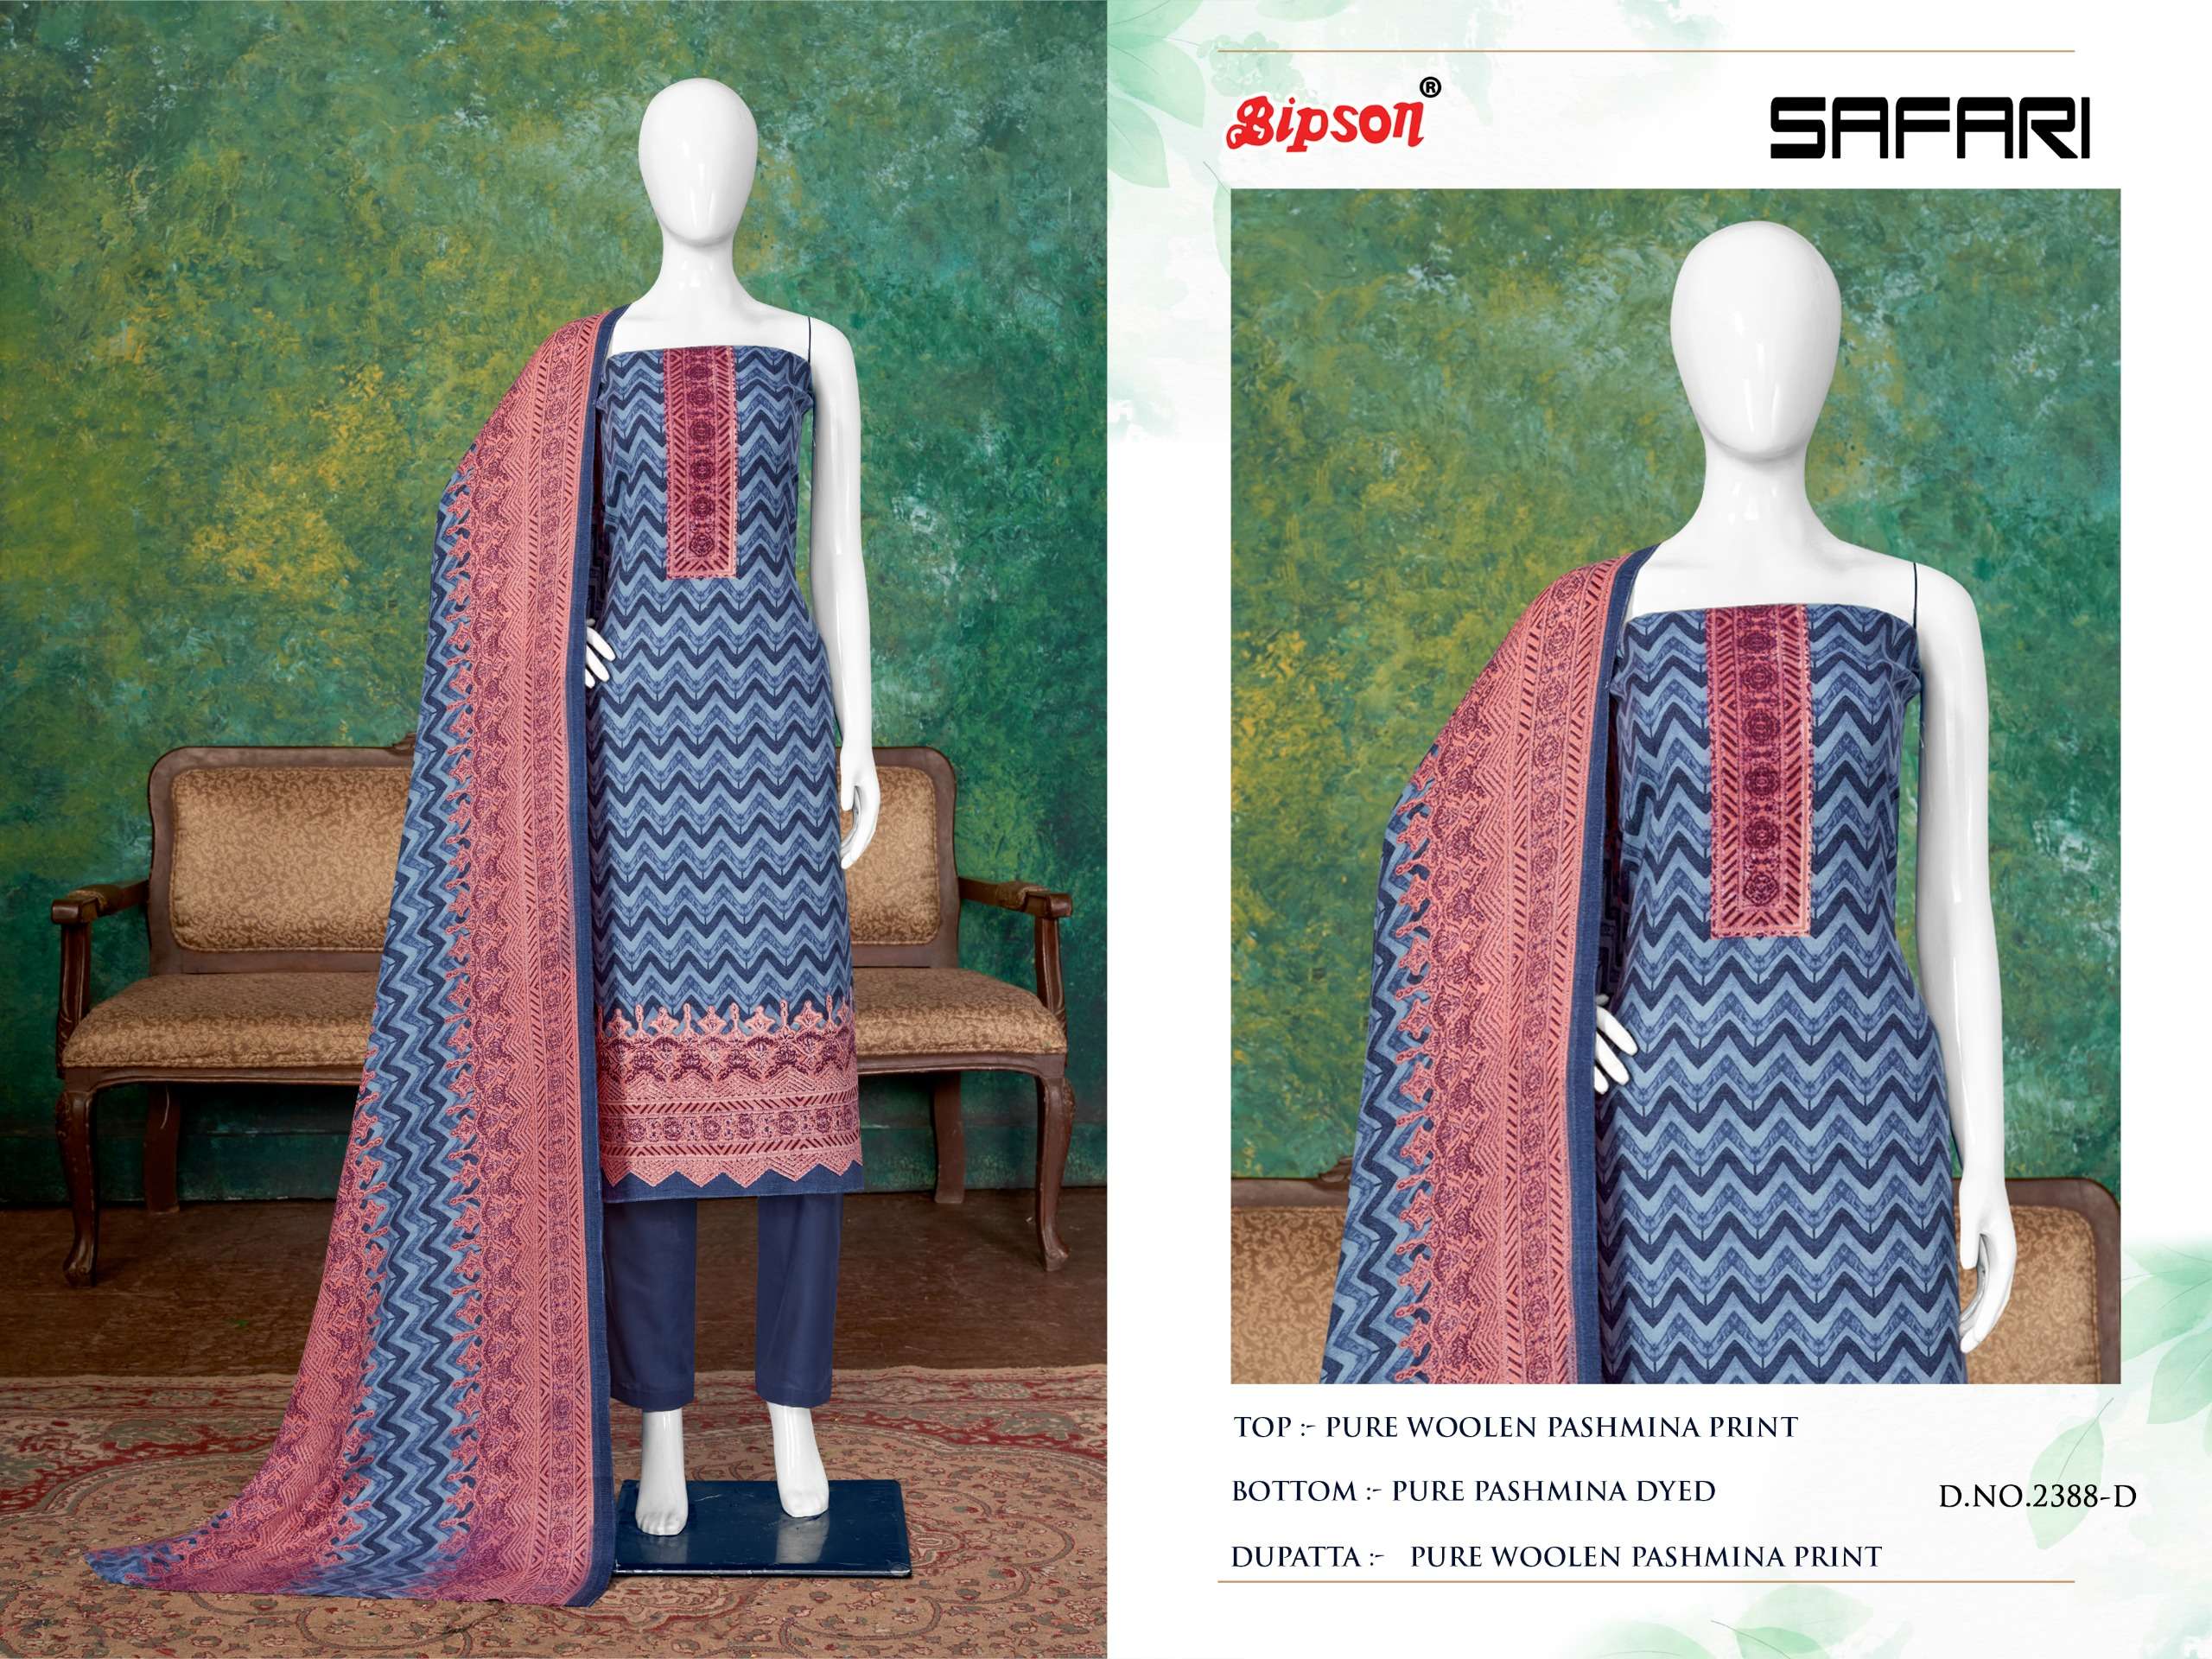 bipson safari 2388 colour series latest wedding wear pakistani salwar kameez wholesaler surat